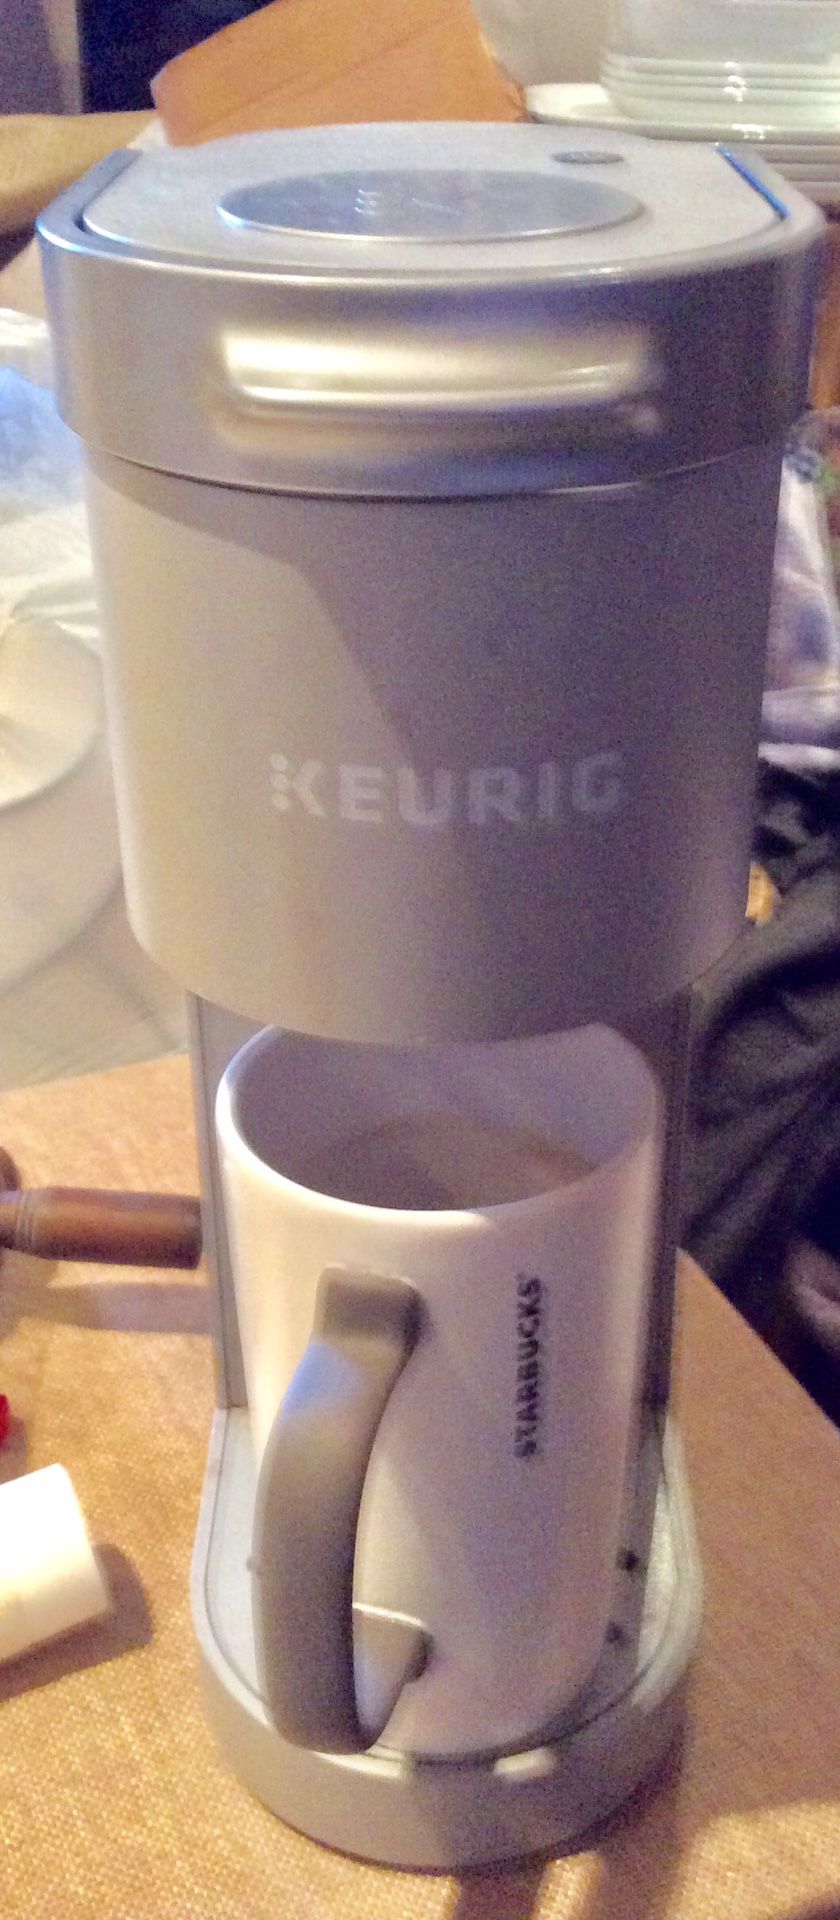 K. MINI, Keurig single serve coffee maker light grey color $85